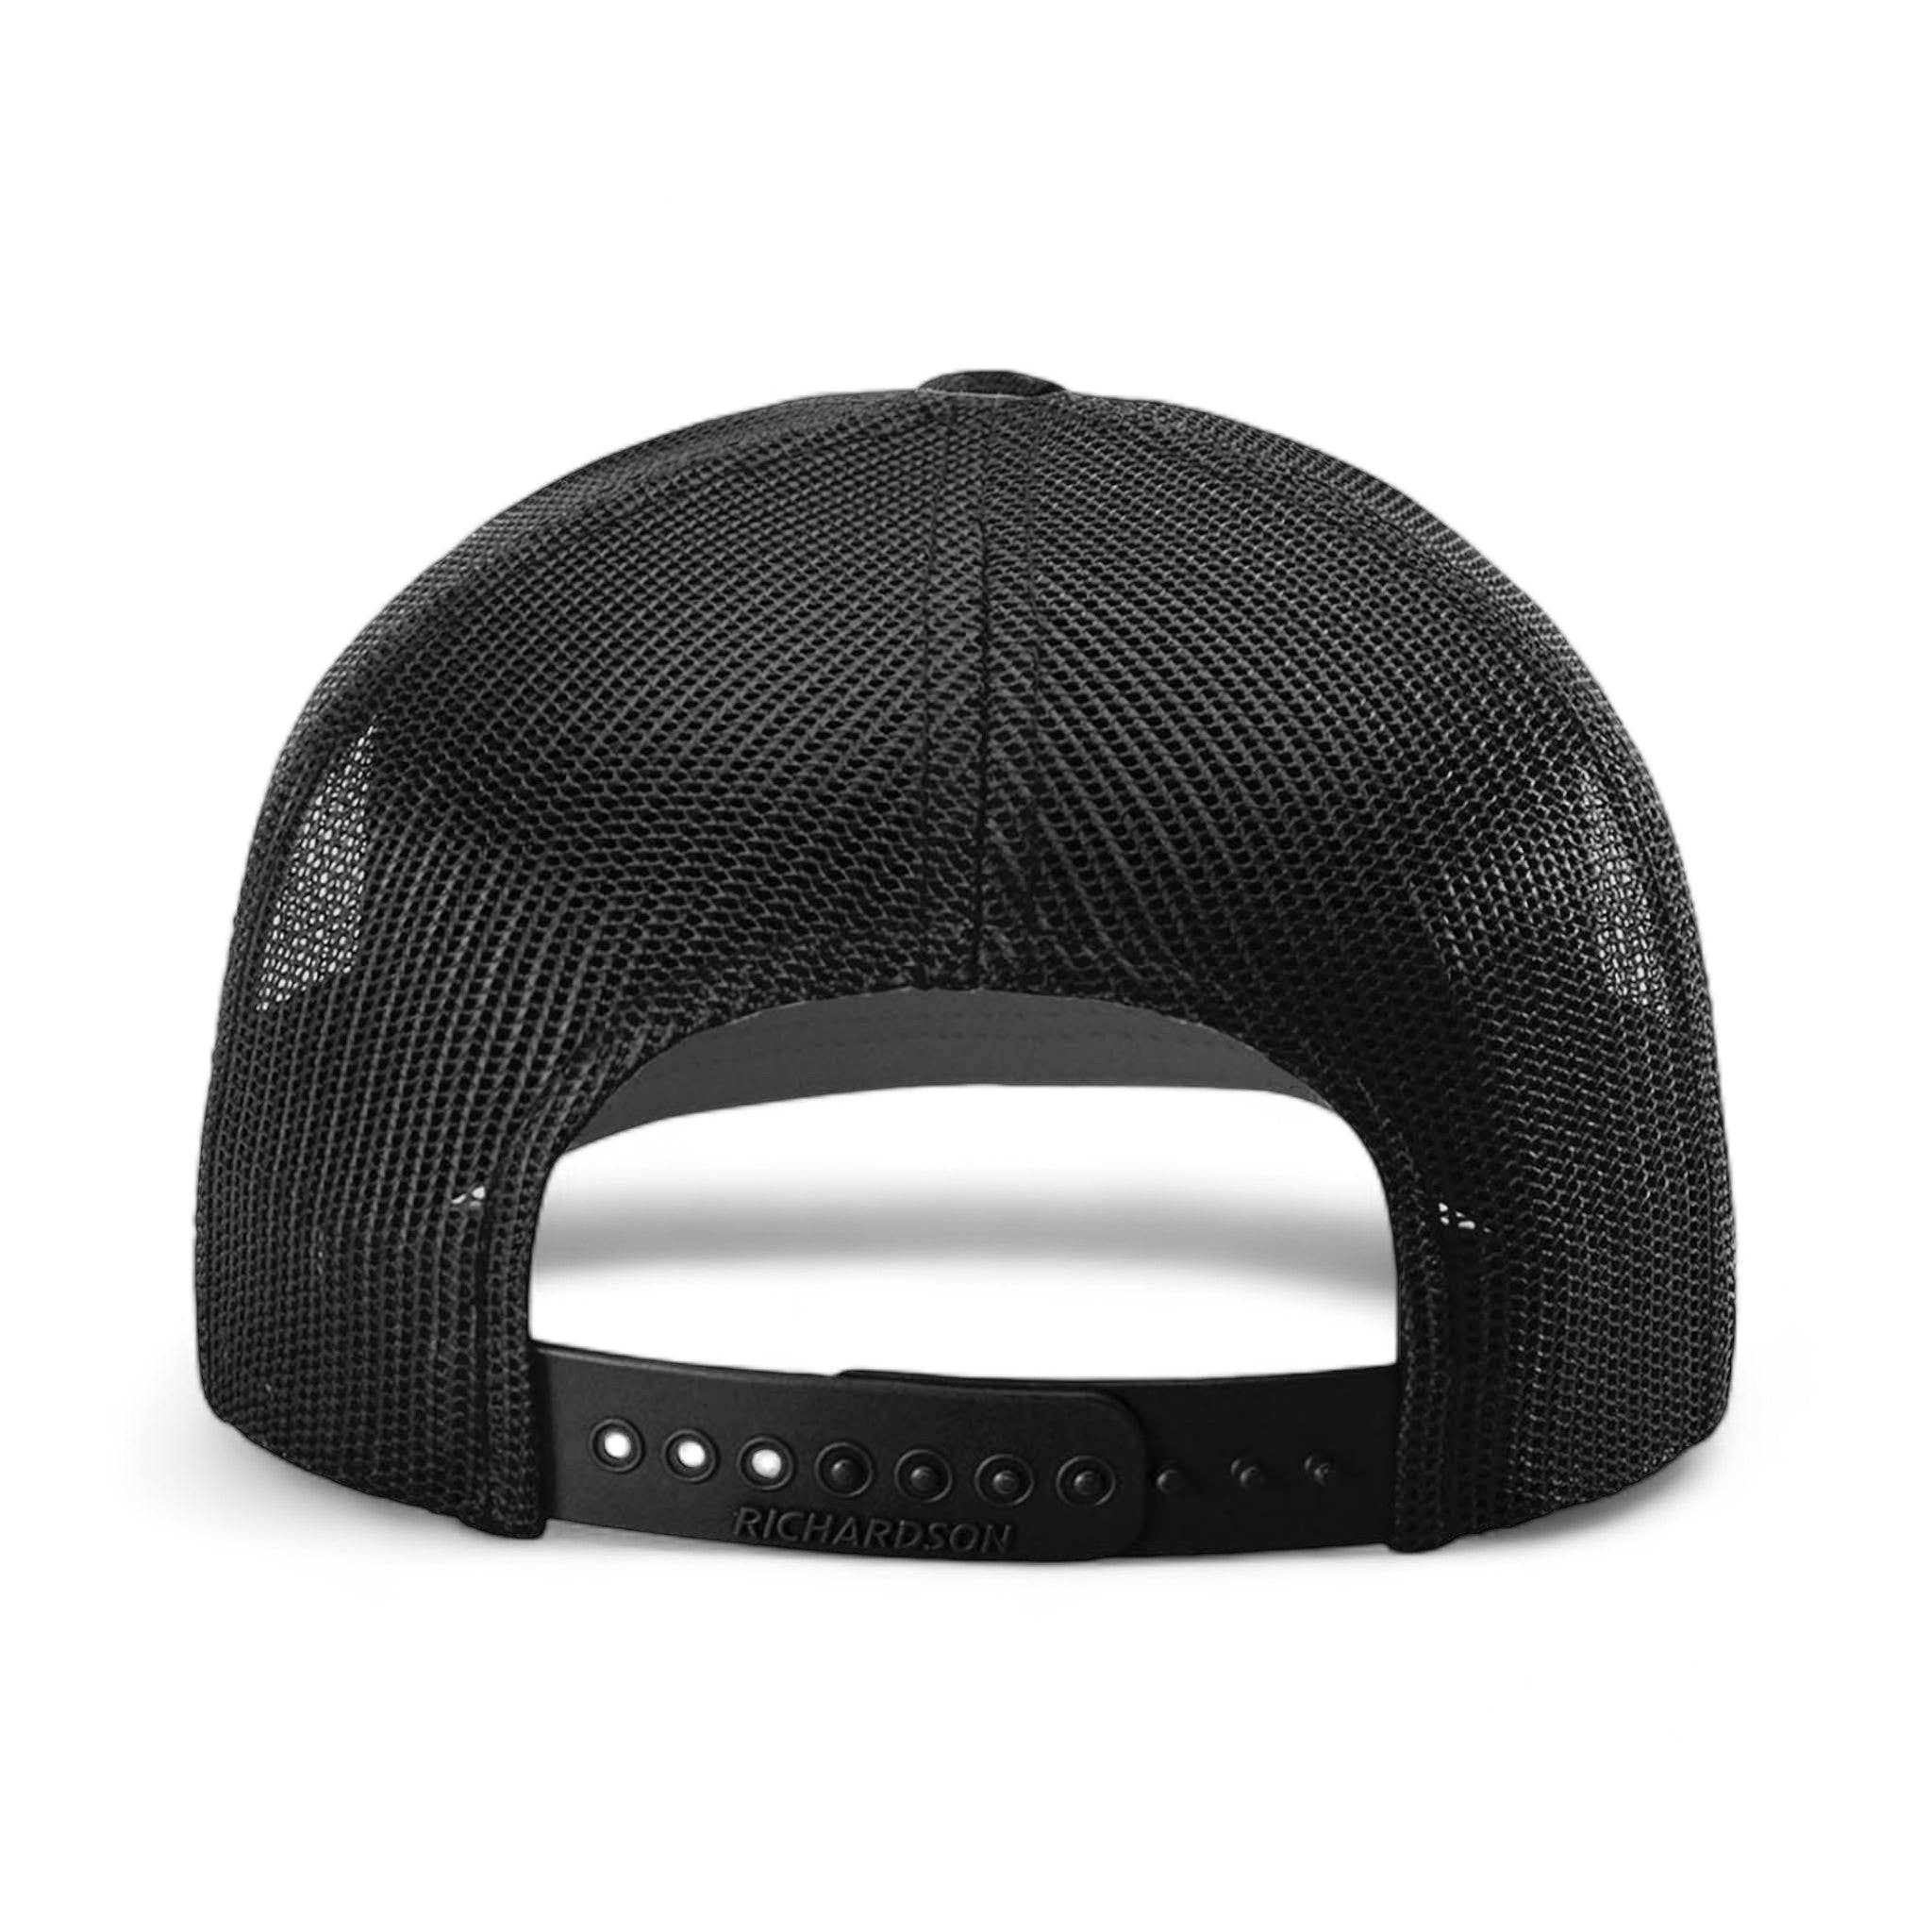 Back view of Richardson 862 custom hat in multicam black